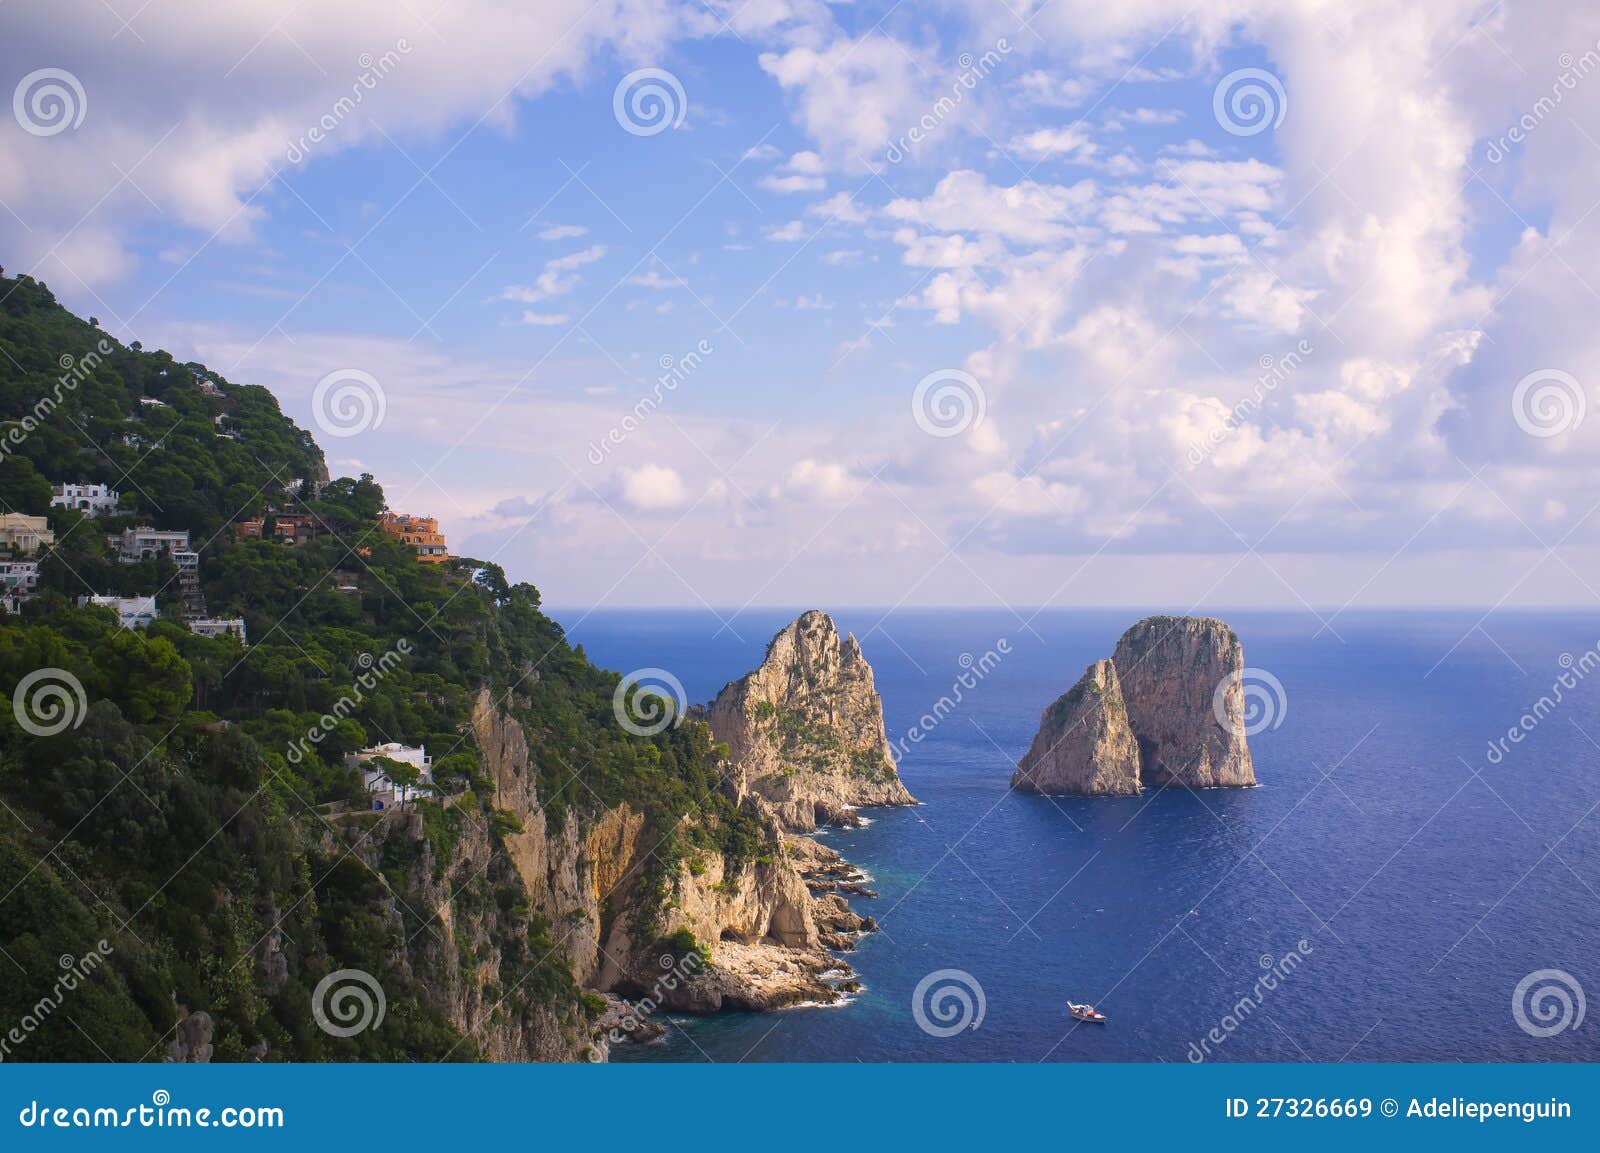 coastline cliffs view, capri italy